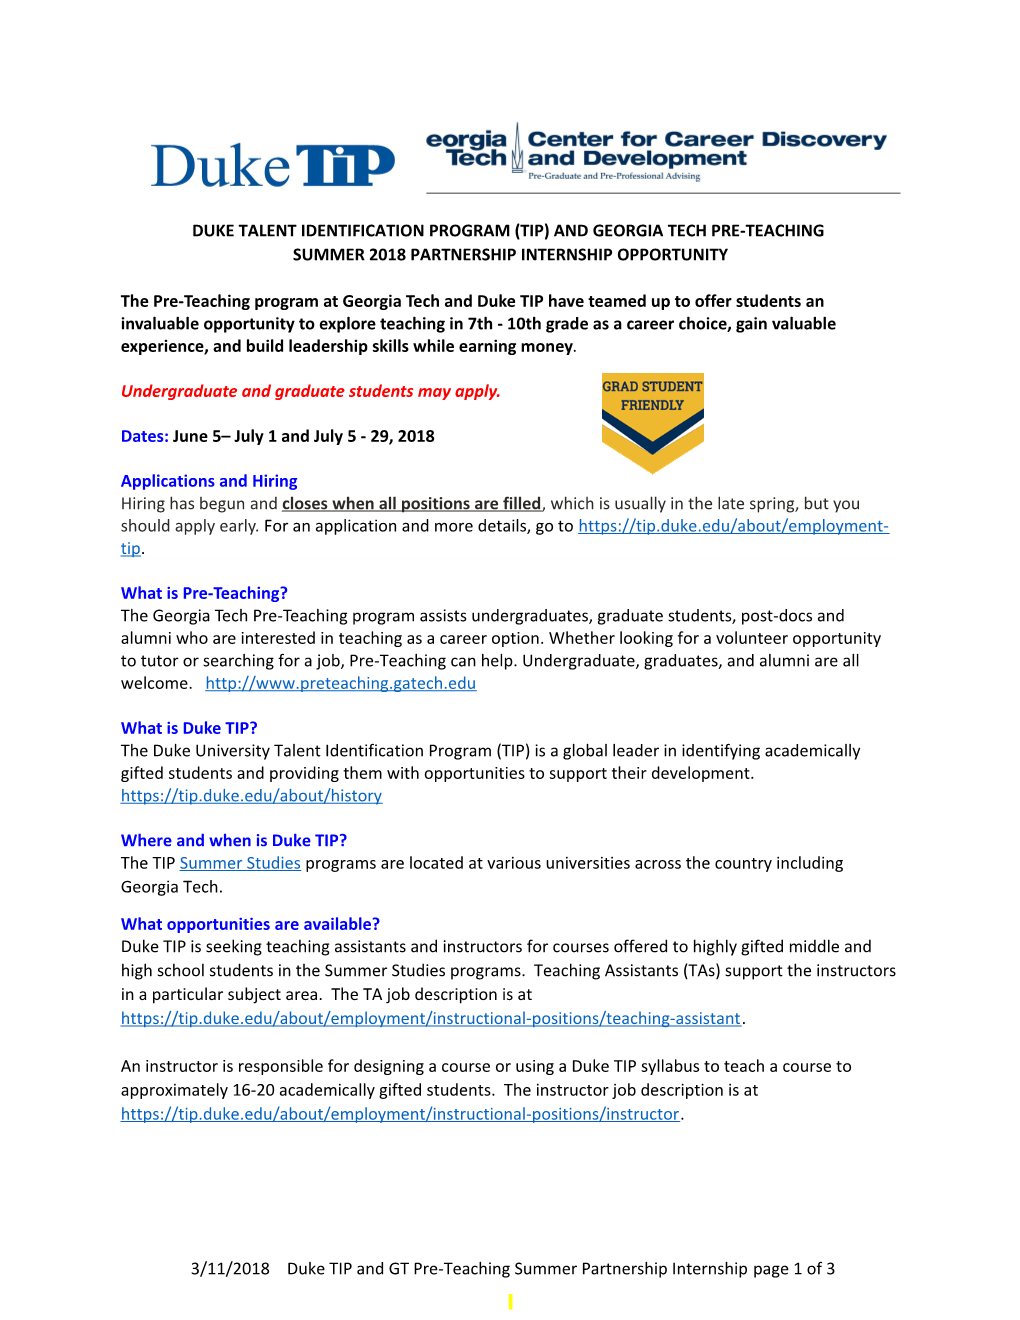 Duke Talent Identification Program (Tip) and Georgia Tech Pre-Teaching